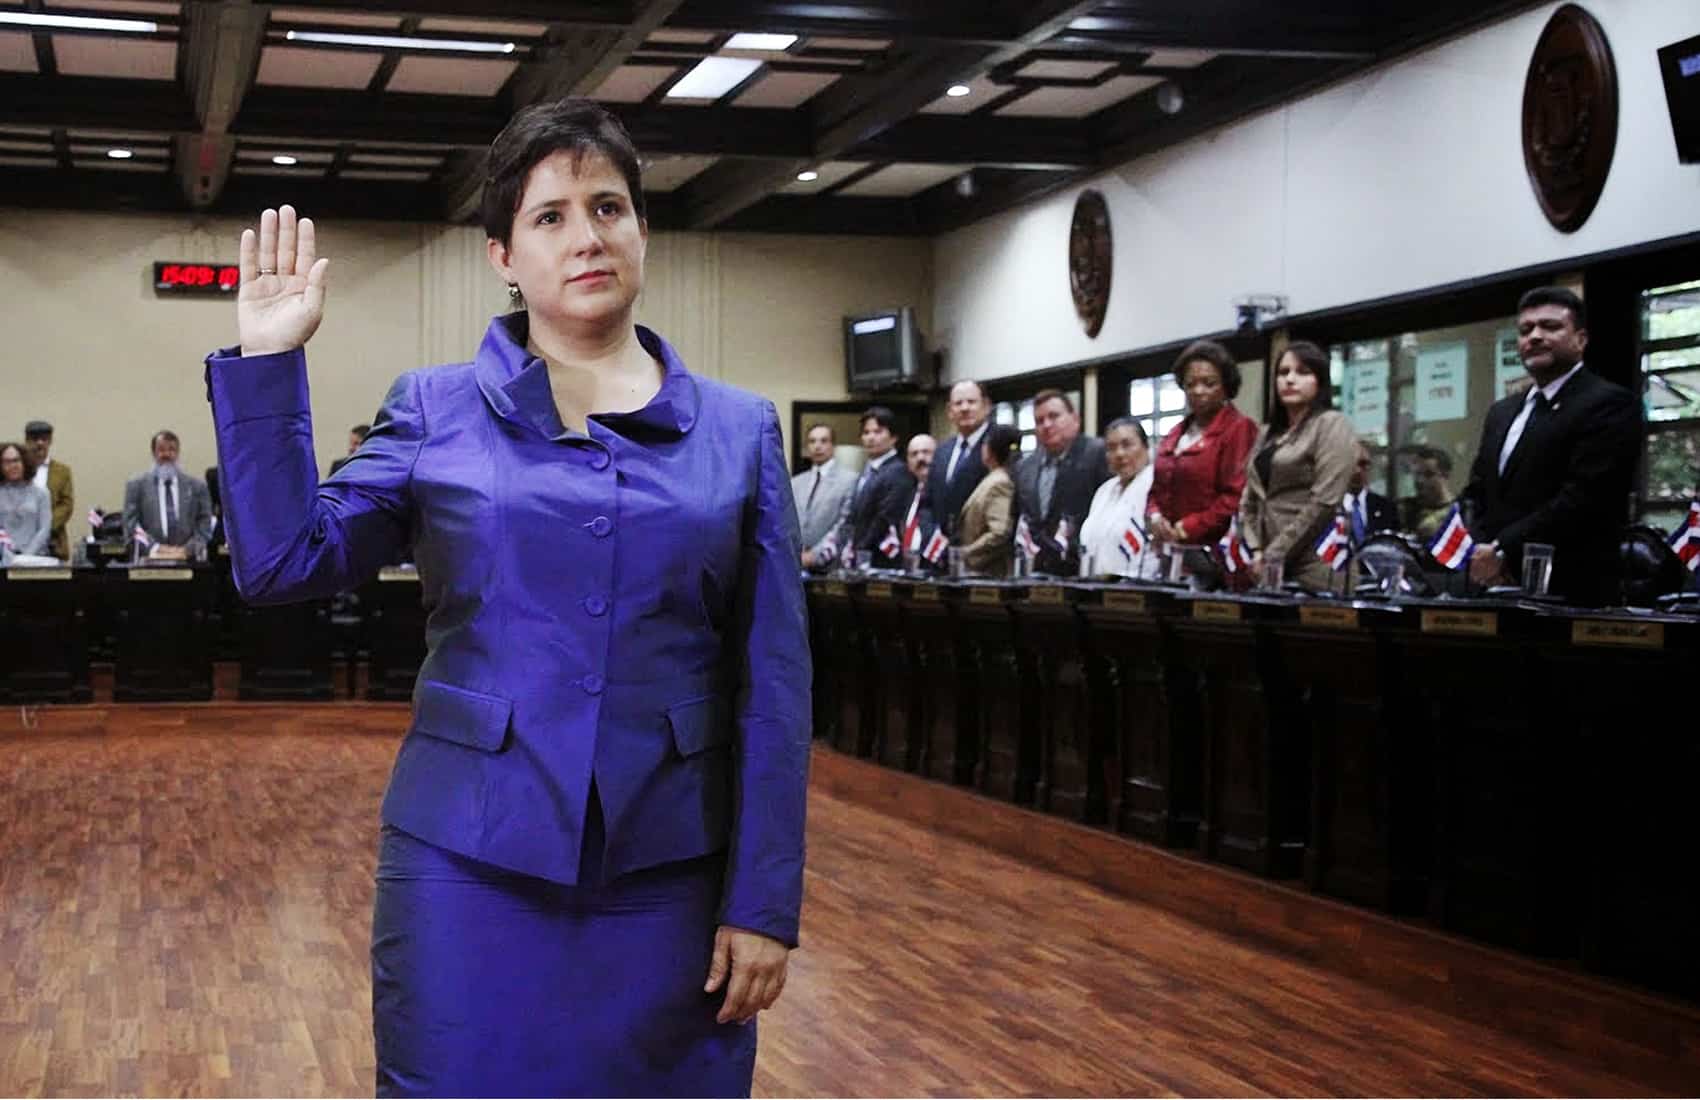 Ombudswoman Monserrat Solano Carboni